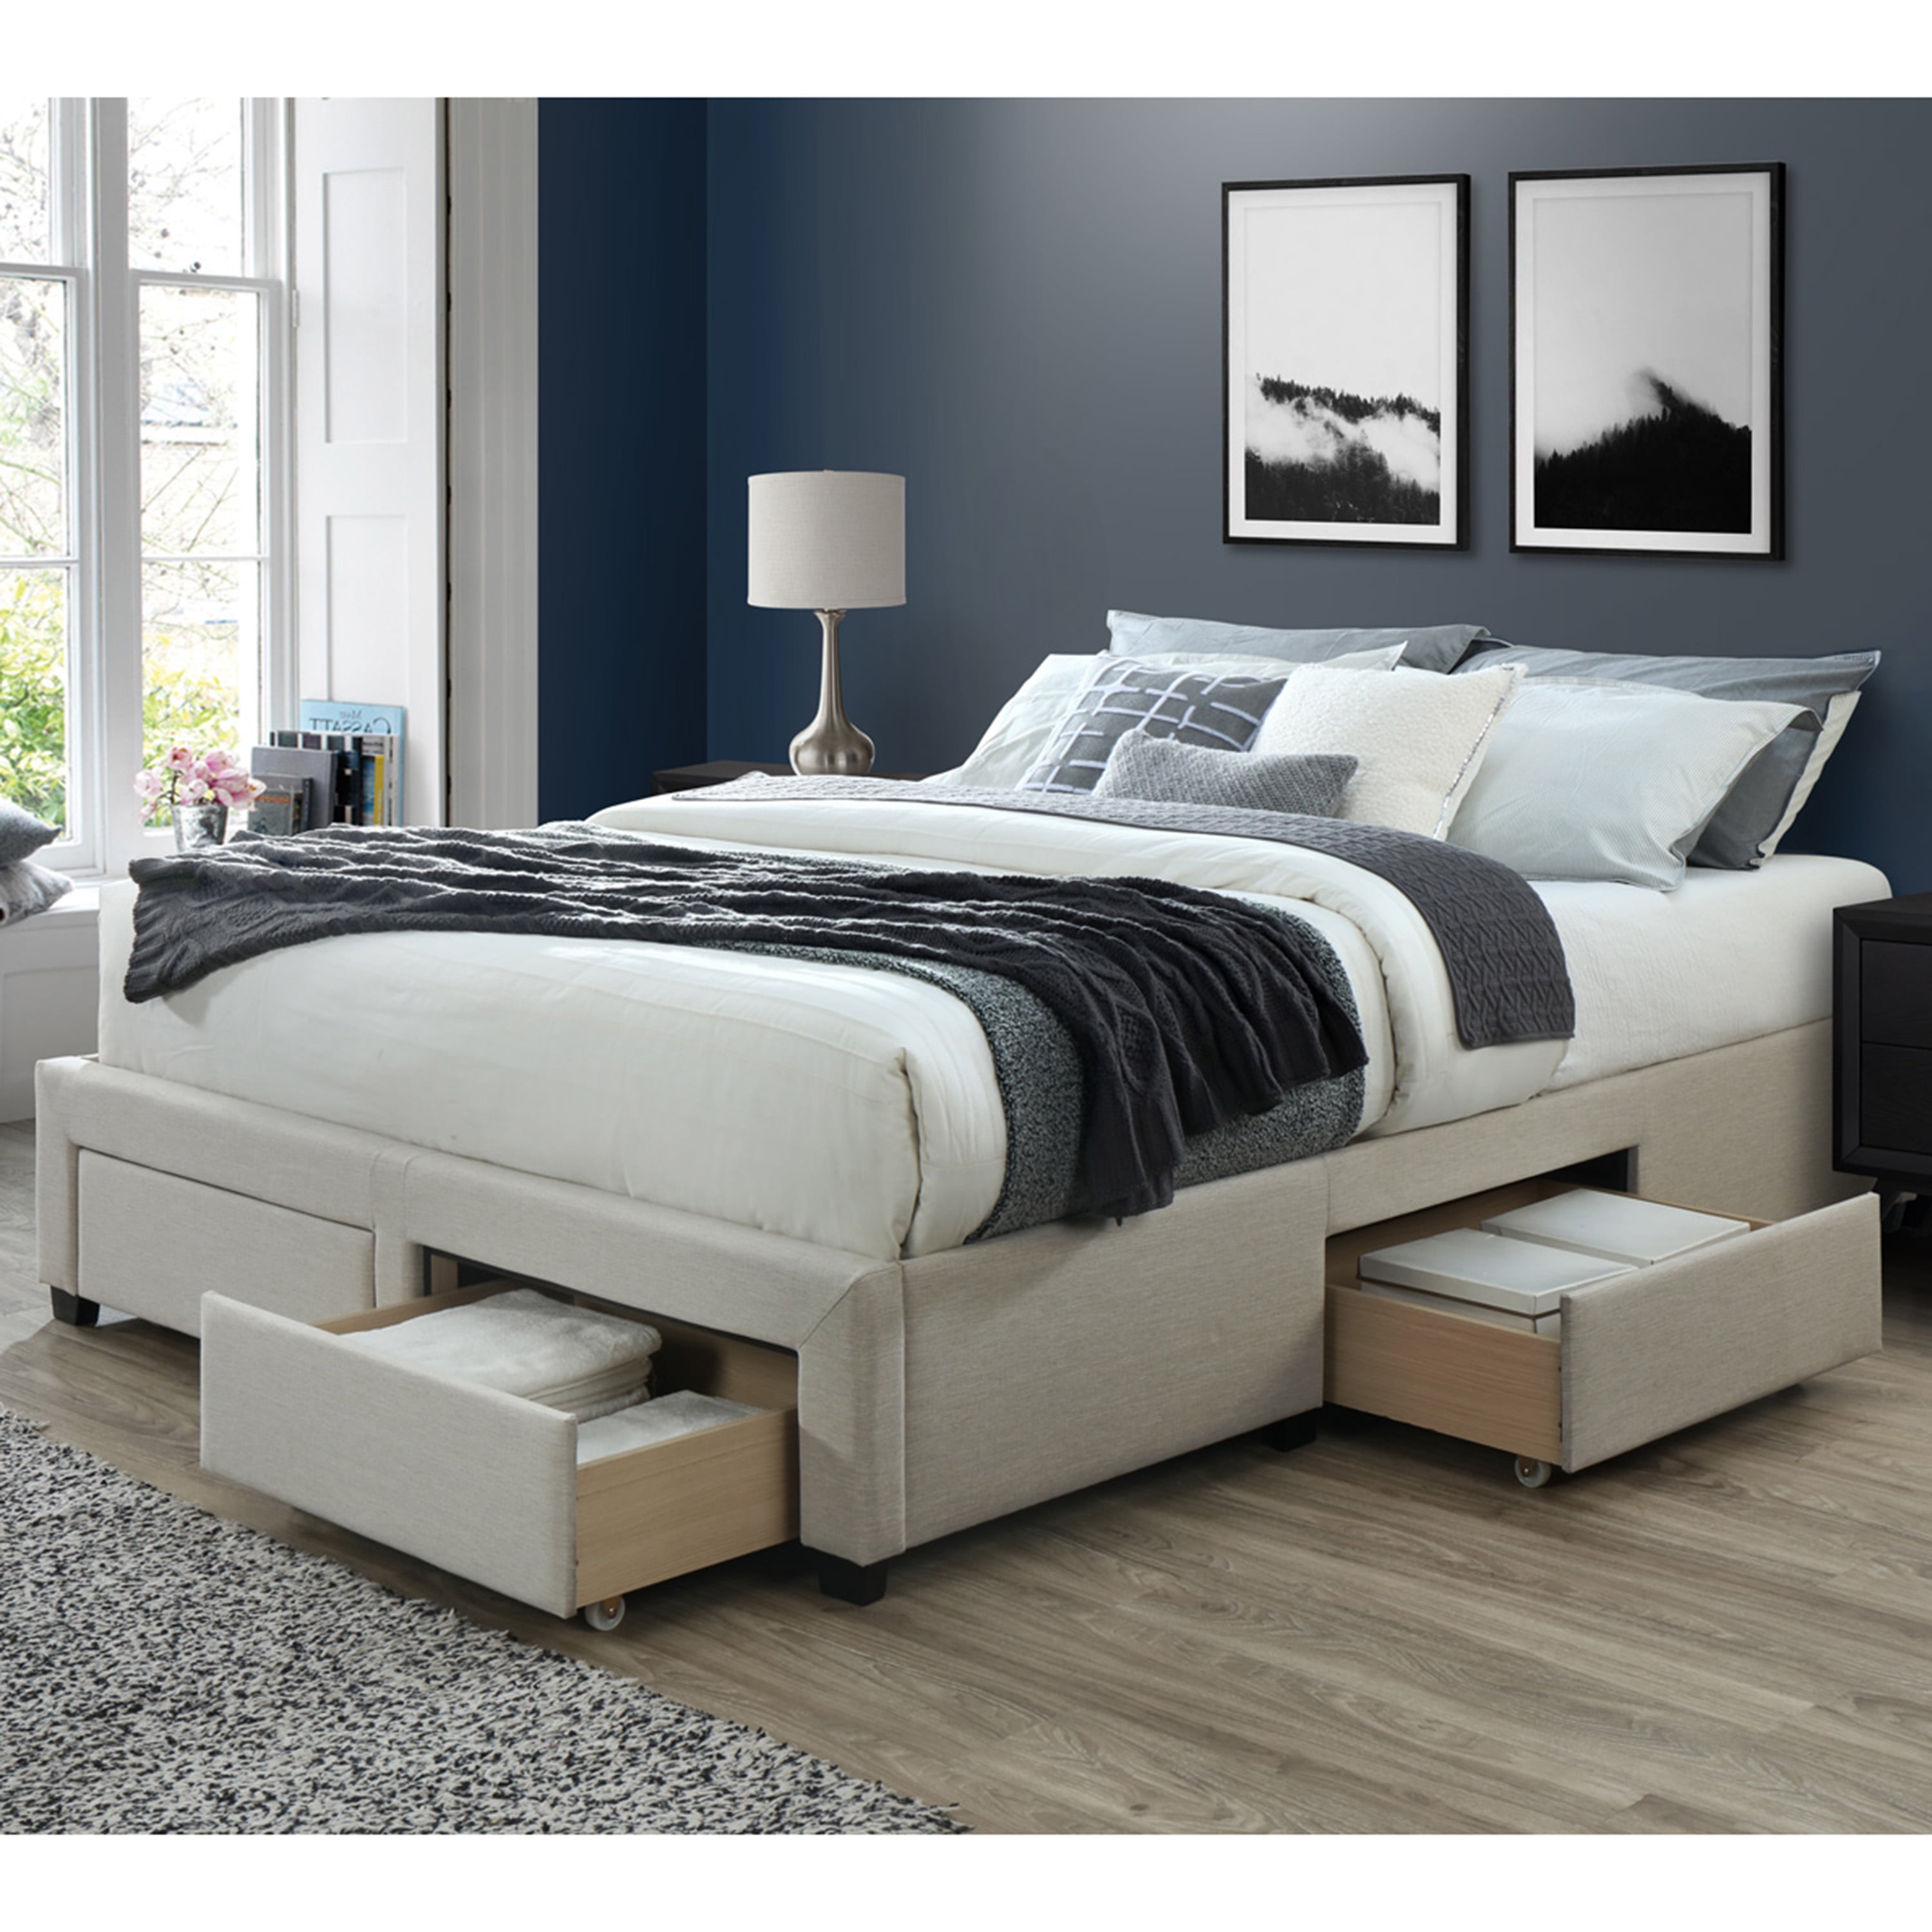 DG Casa Cosmo Upholstered Platform Bed Frame Base with Storage Drawers